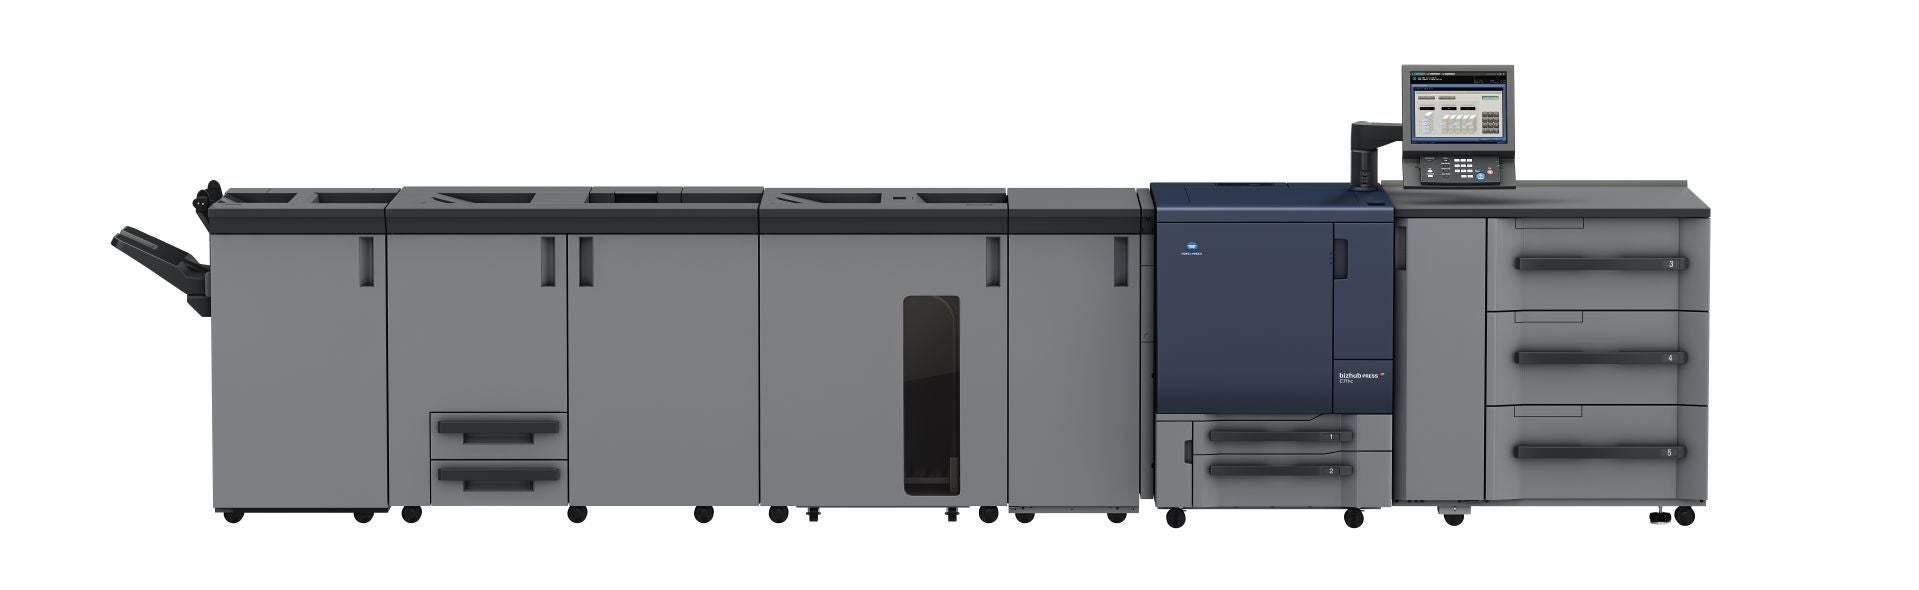 Konica Minolta bizhub pro c71hc professional printer